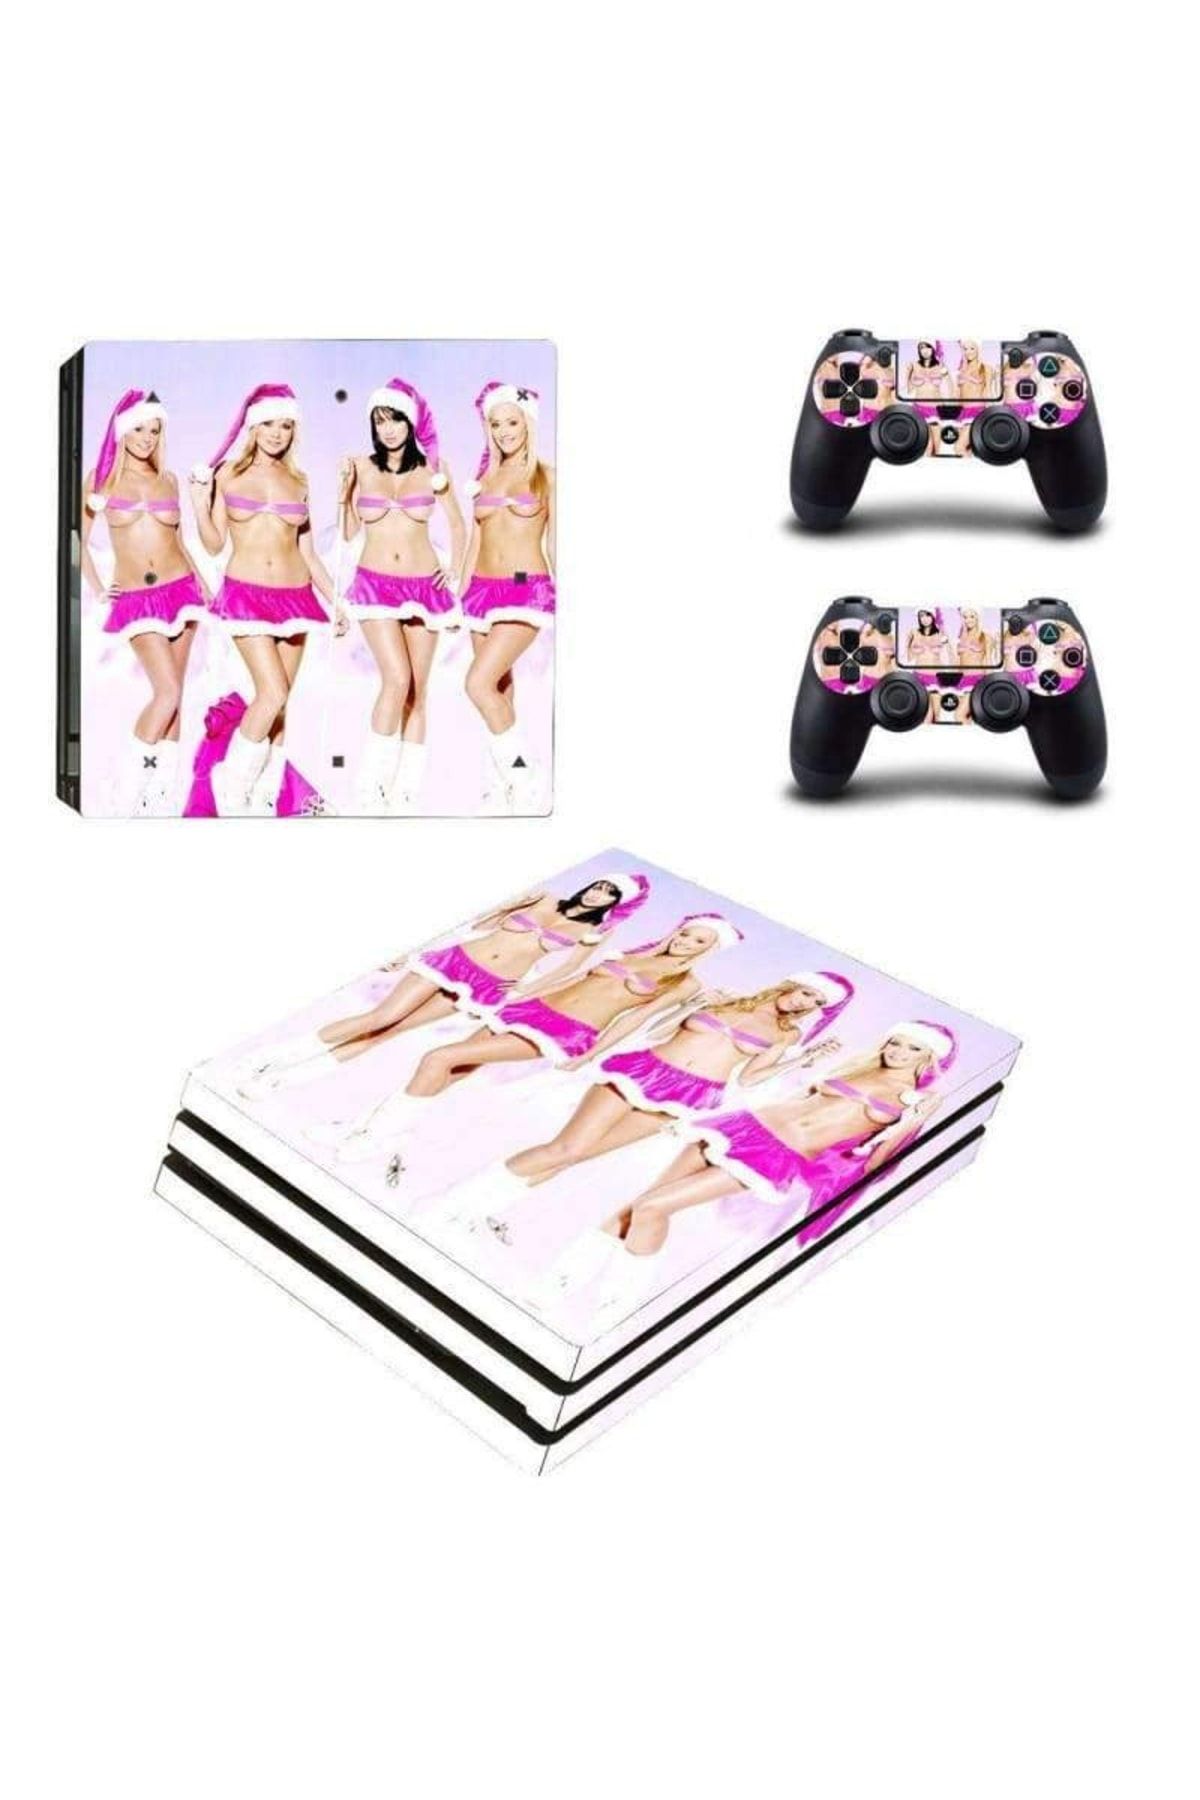 Kt Grup Sexy Girls Playstation 4 Pro Full Sticker Kaplama